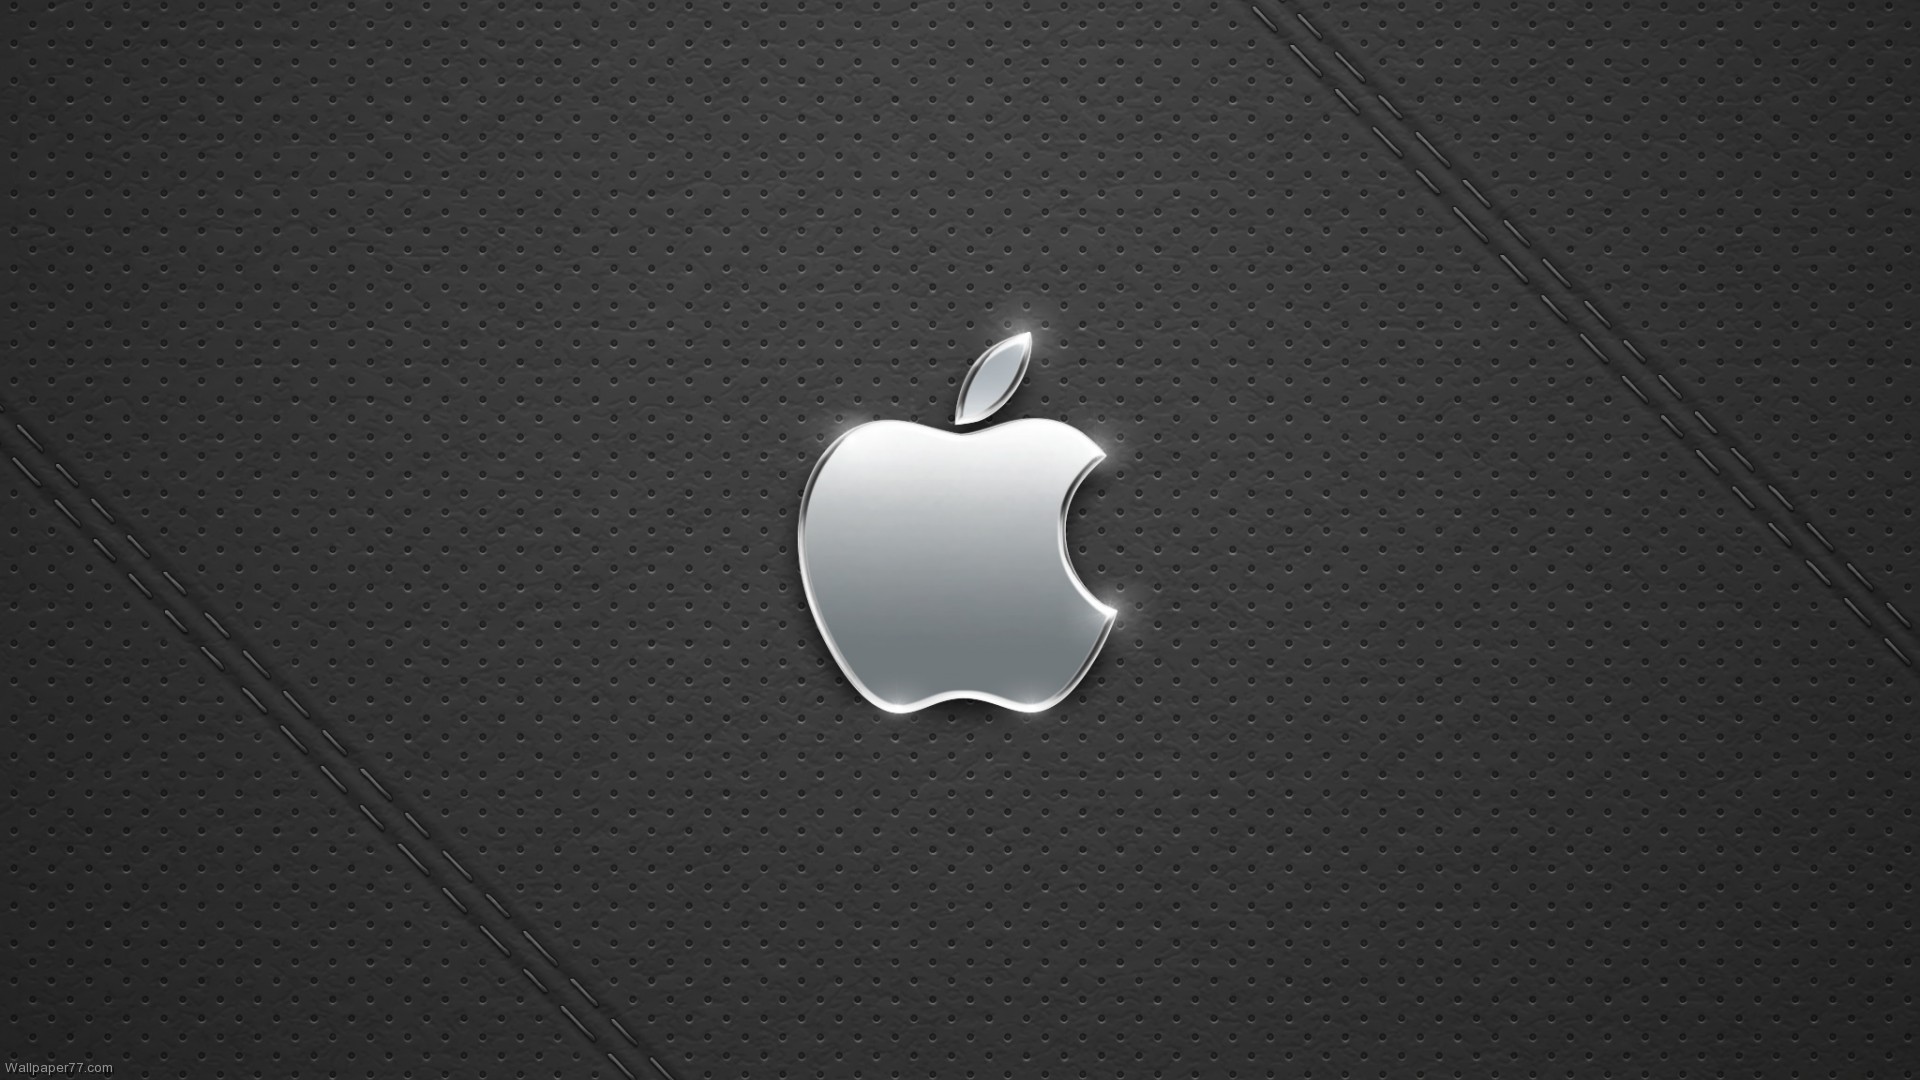 Wallpaper Apple Logo Leather Puter Mac Retina